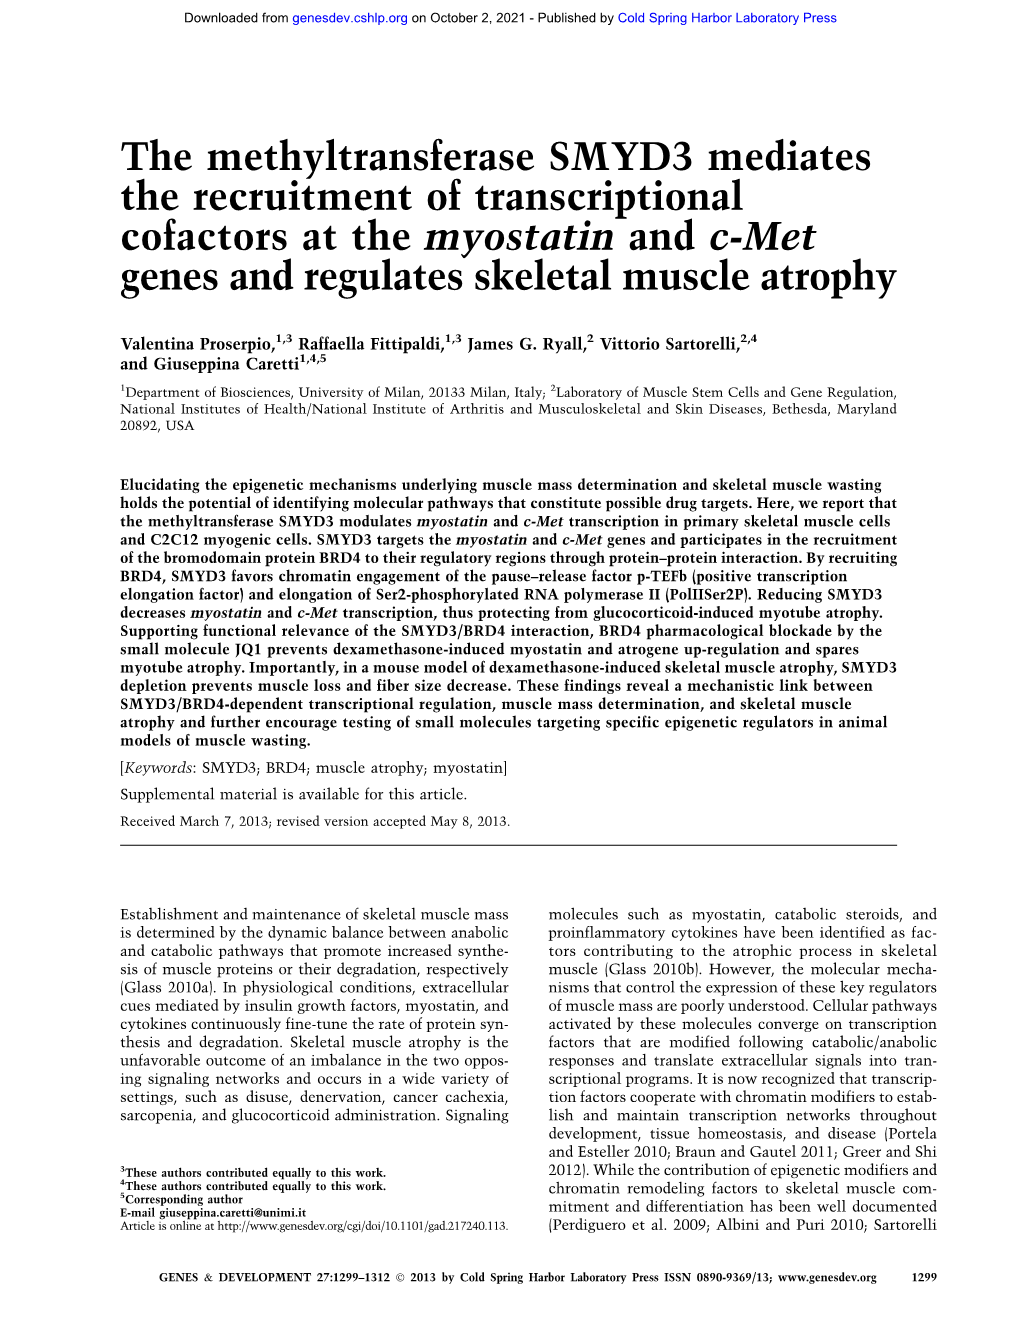 The Methyltransferase SMYD3 Mediates the Recruitment of Transcriptional Cofactors at the Myostatin and C-Met Genes and Regulates Skeletal Muscle Atrophy